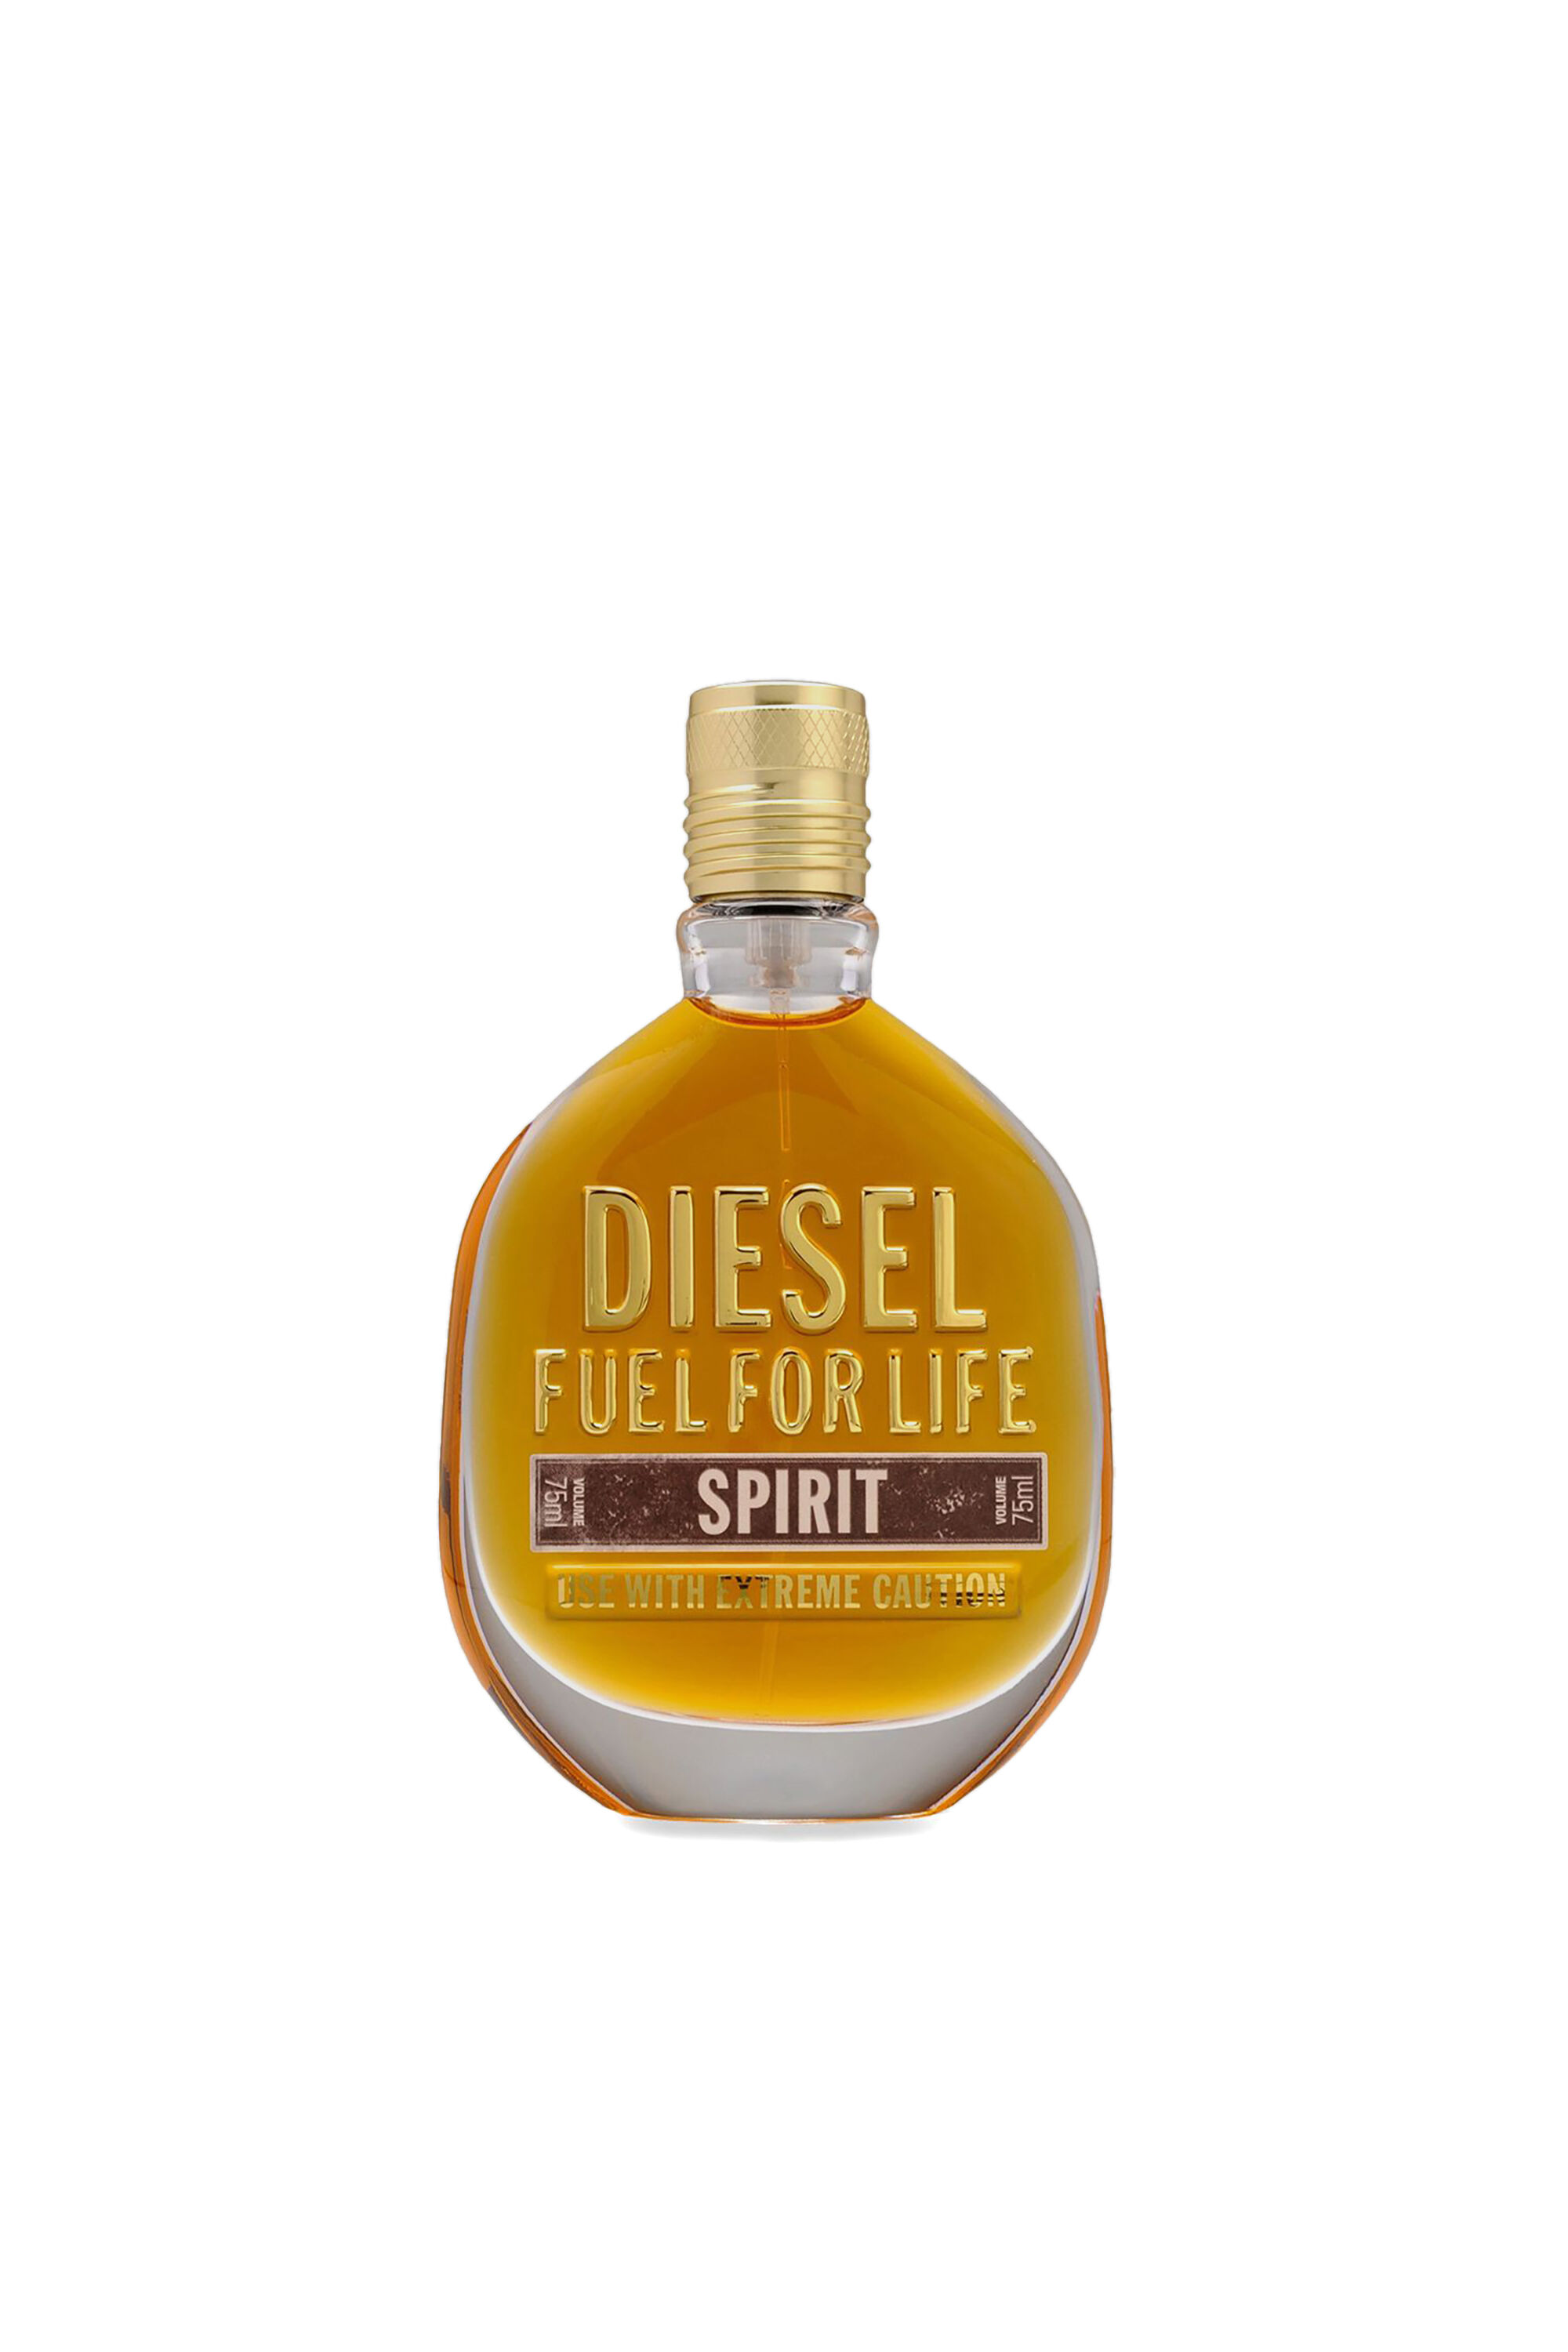 Diesel - FUEL FOR LIFE SPIRIT 75ML, Generic - Image 2